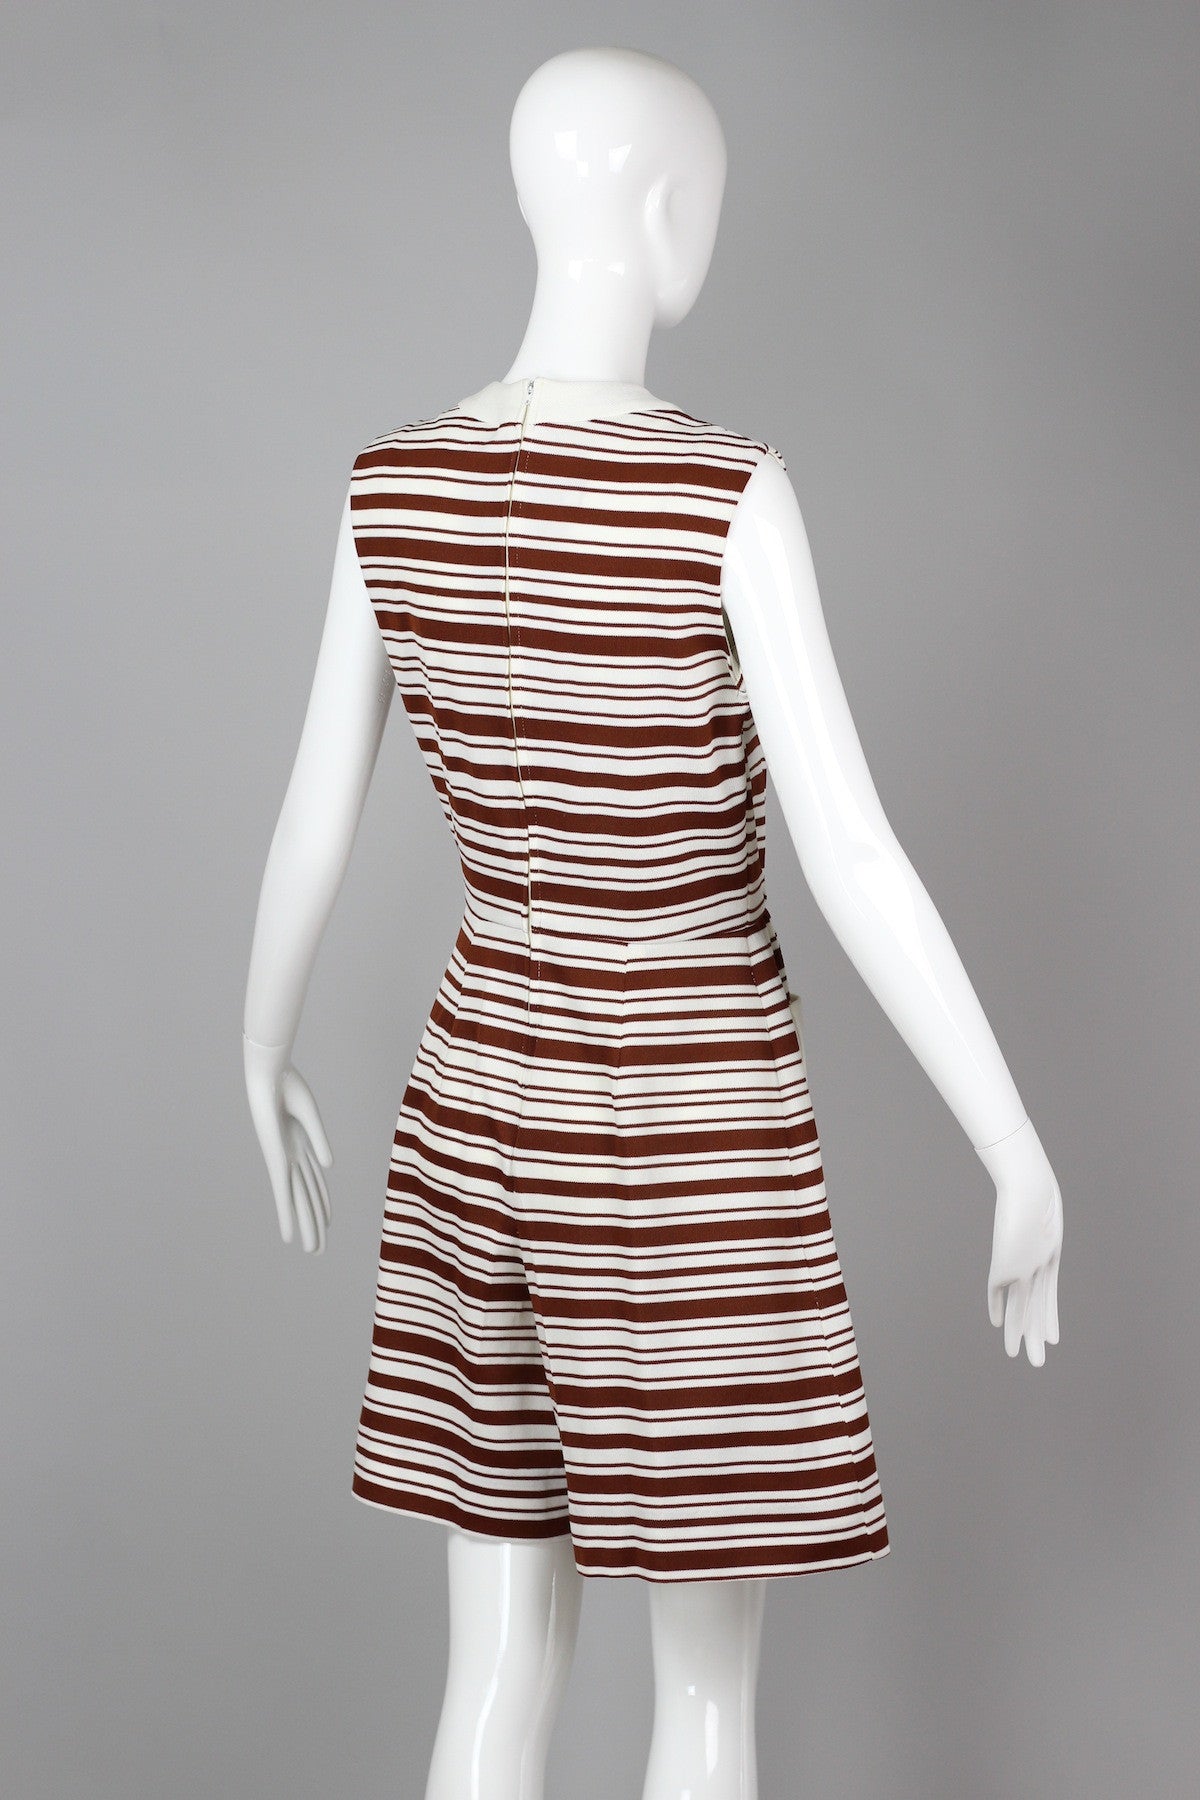 Vintage 1960s Striped Culottes Romper Playsuit